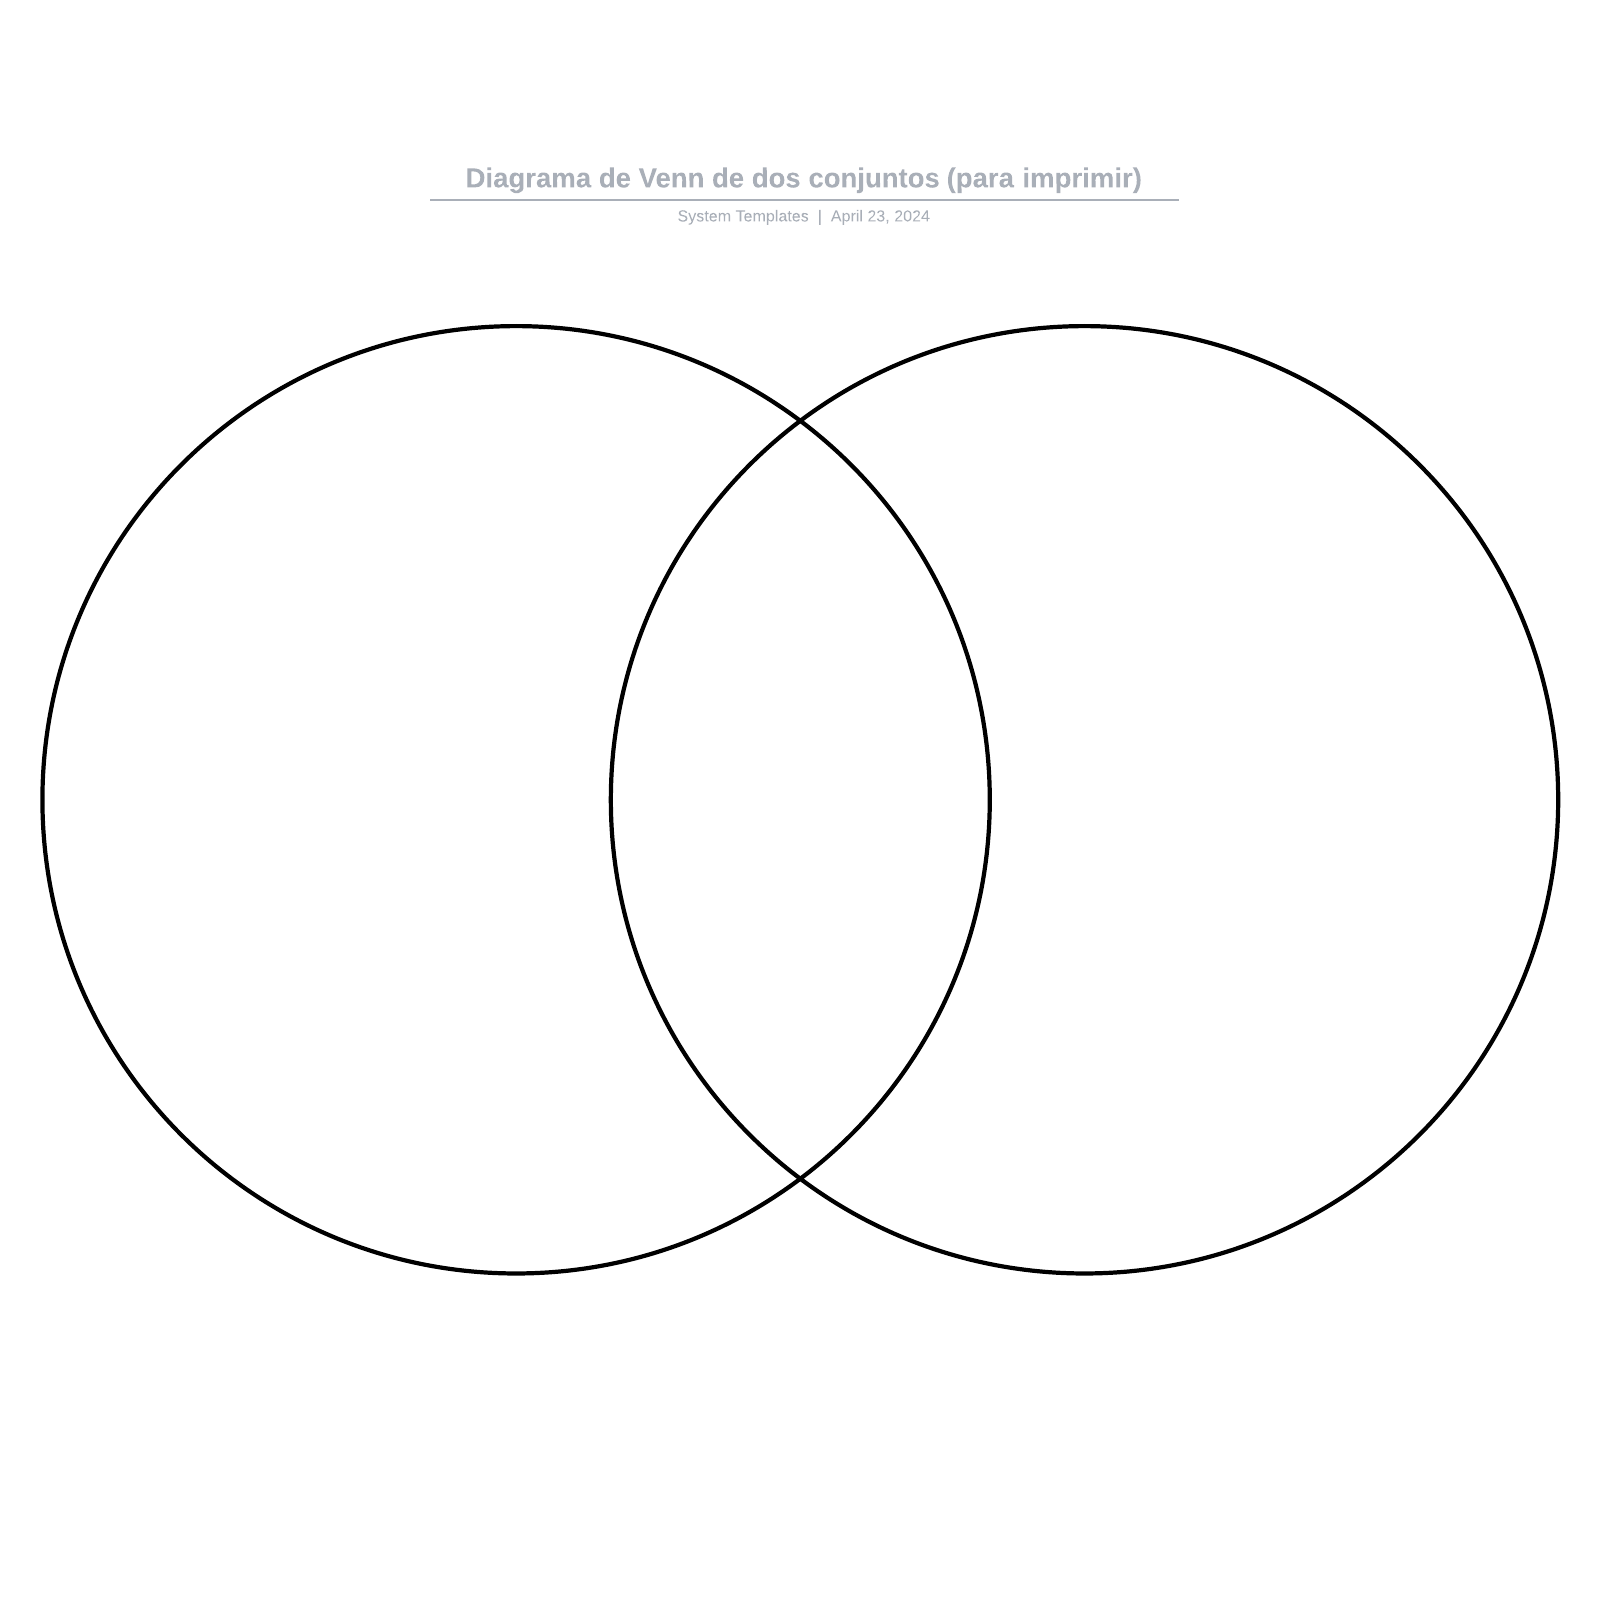 Diagrama de Venn de dos conjuntos (para imprimir) example